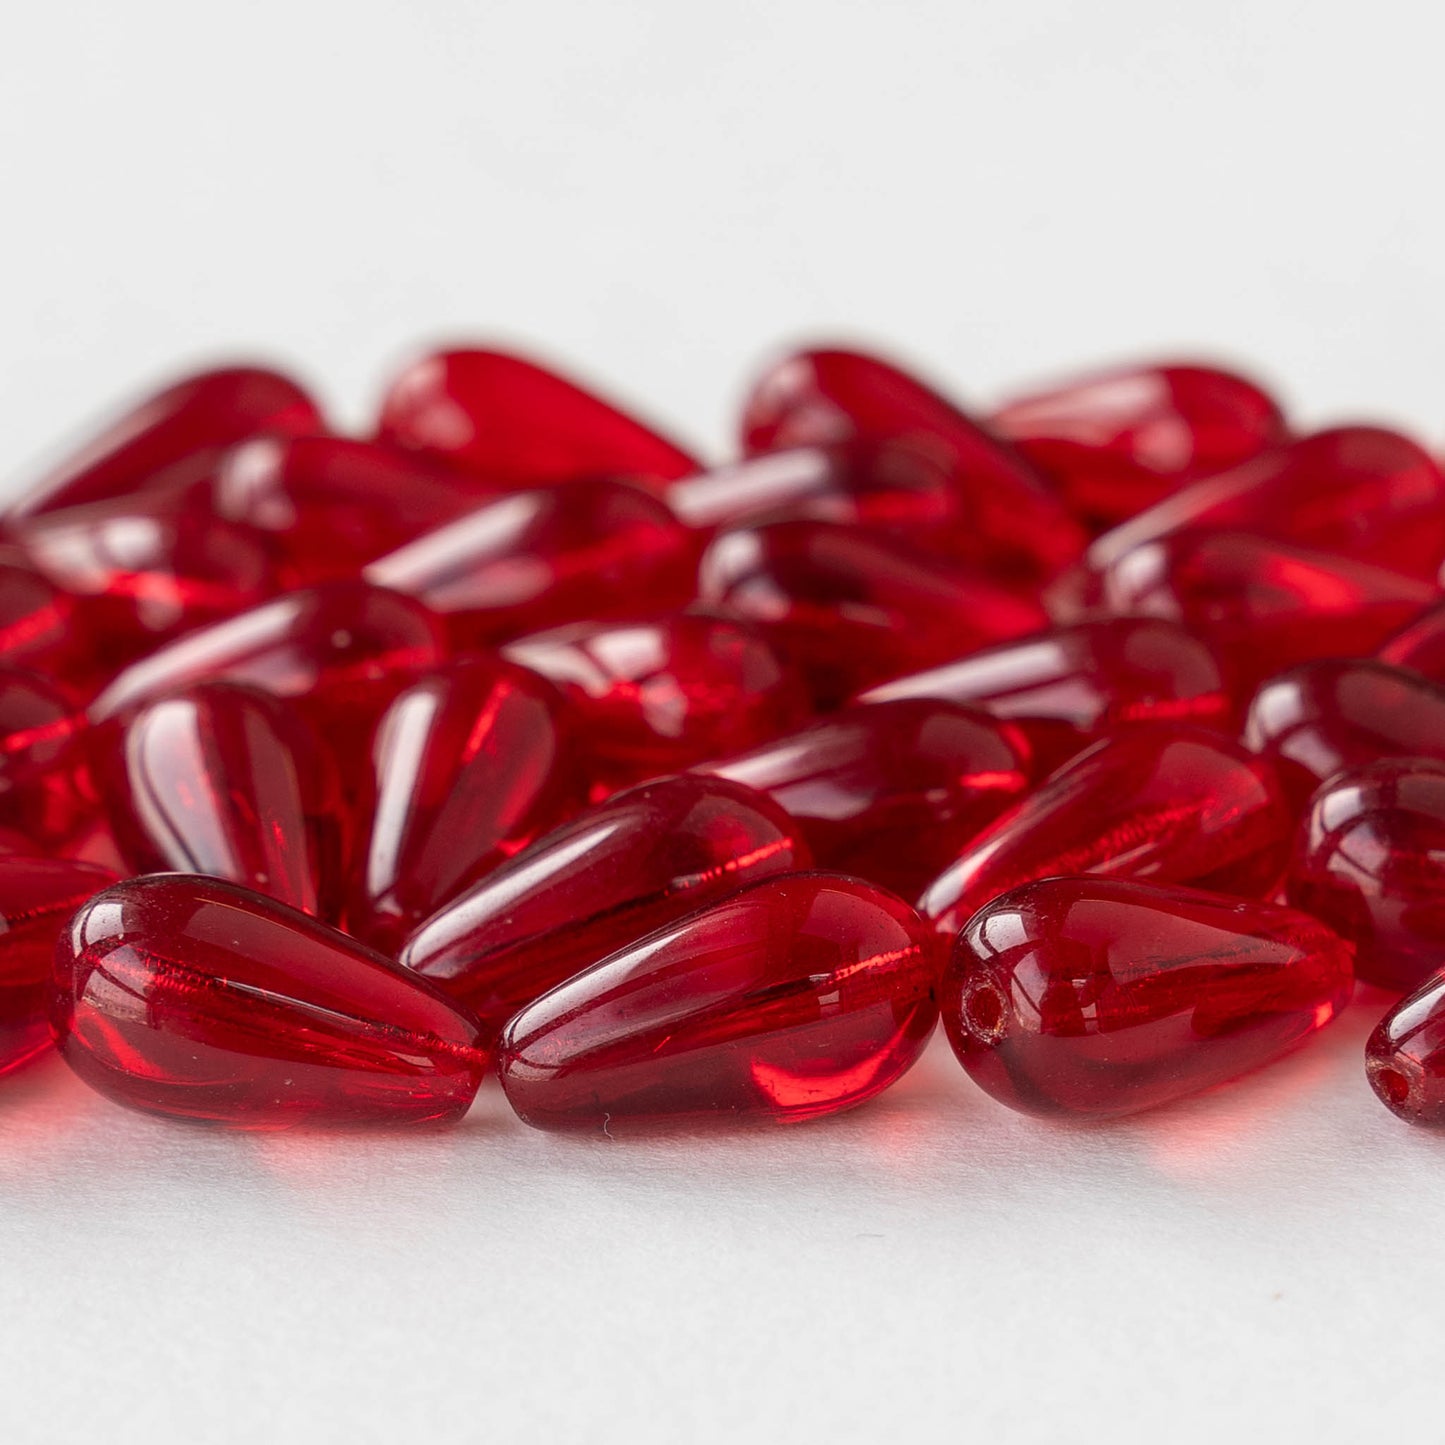 8x15mm Glass Teardrop Beads - Siam Red - 20 Beads